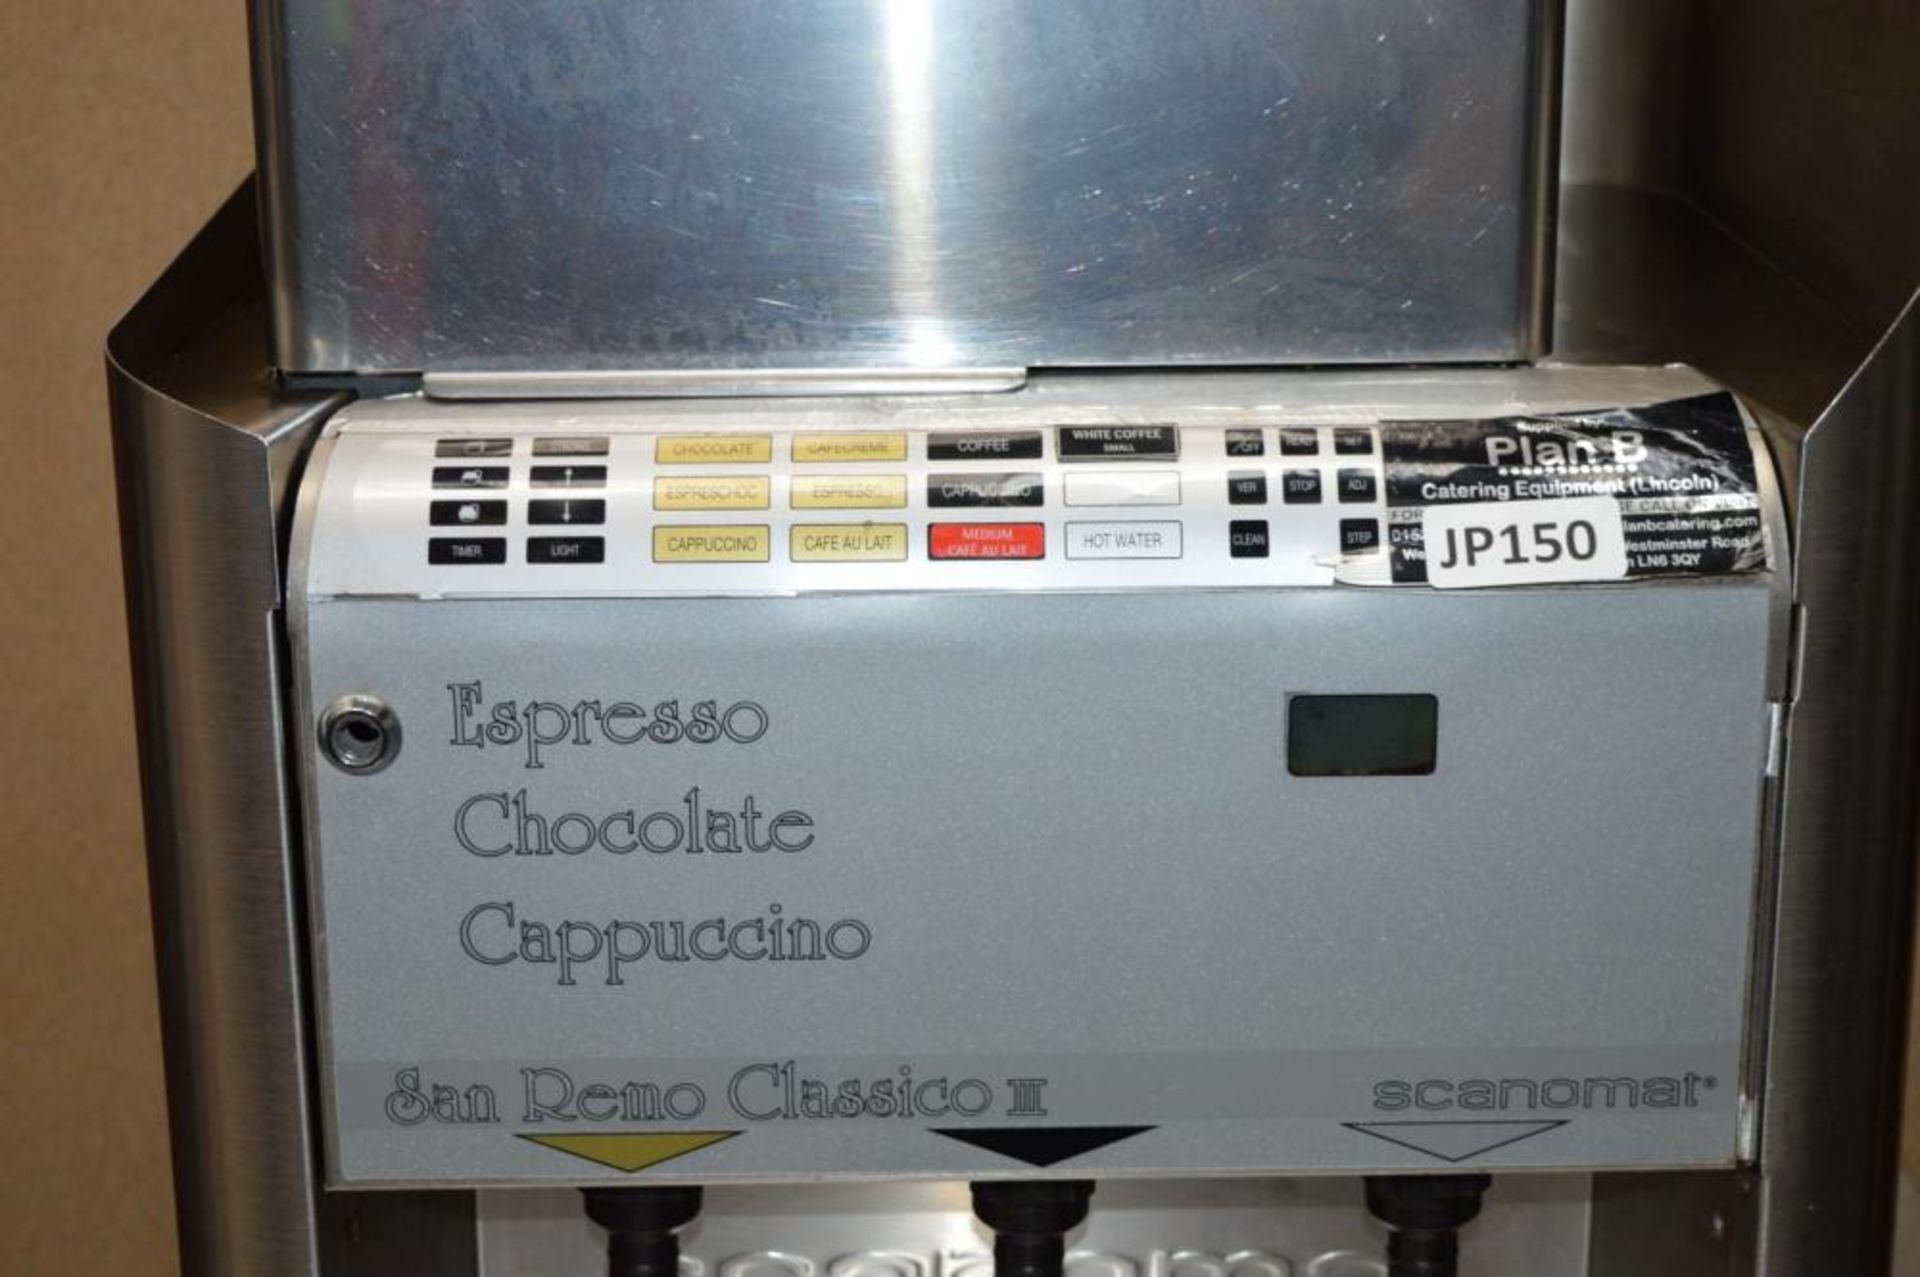 1 x San Remo Classico II Coffee Machine - Espresso, Chocolate and Cappuccino - CL289 - Ref JP150 - - Image 6 of 8